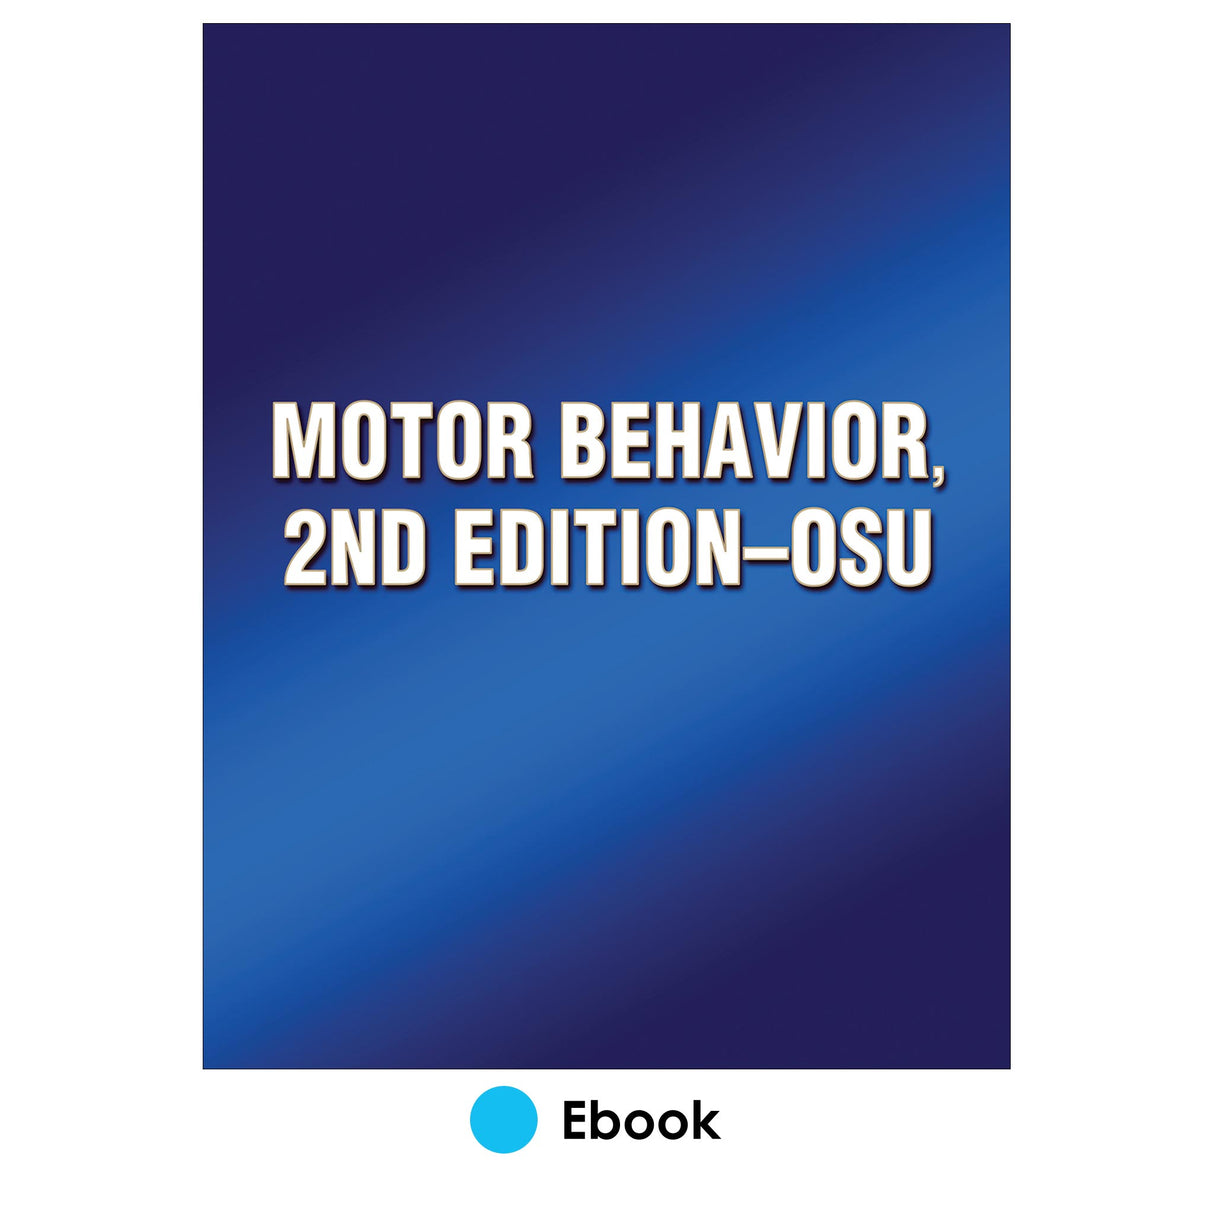 Motor Behavior, 2nd Edition--OSU